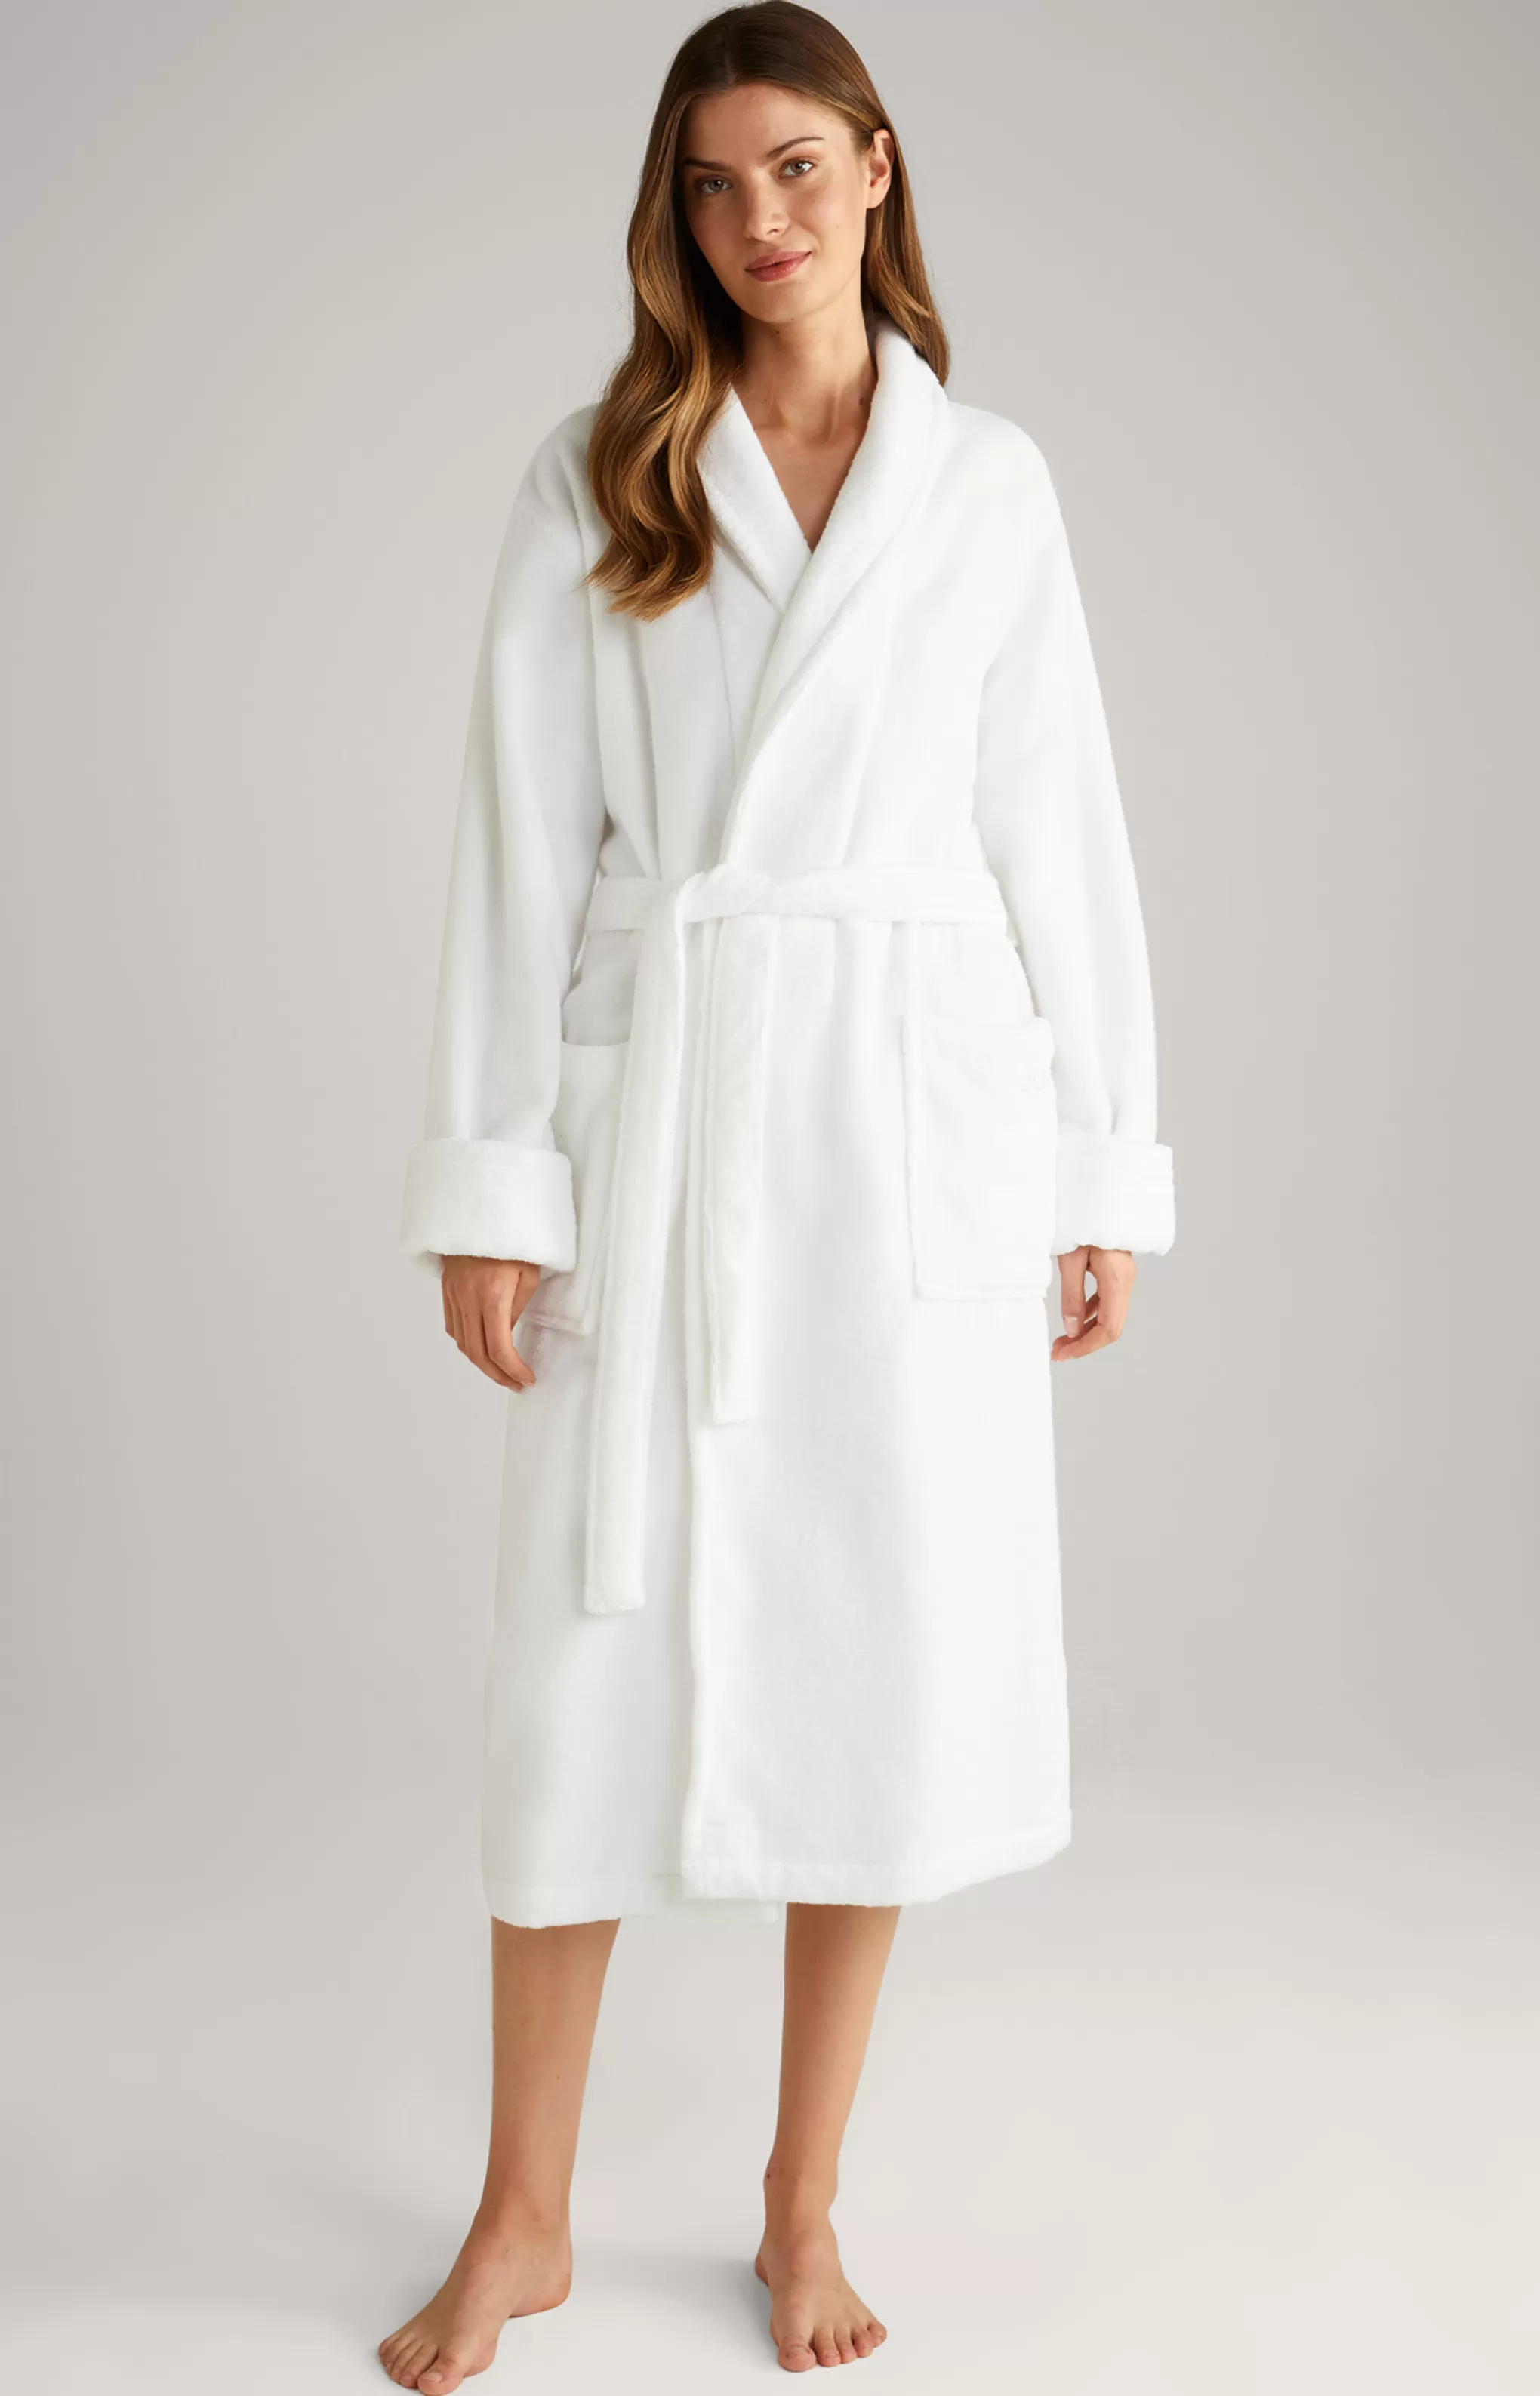 Bathrobes | Loungewear & Nightwear*JOOP Bathrobes | Loungewear & Nightwear Women’s bathrobe in